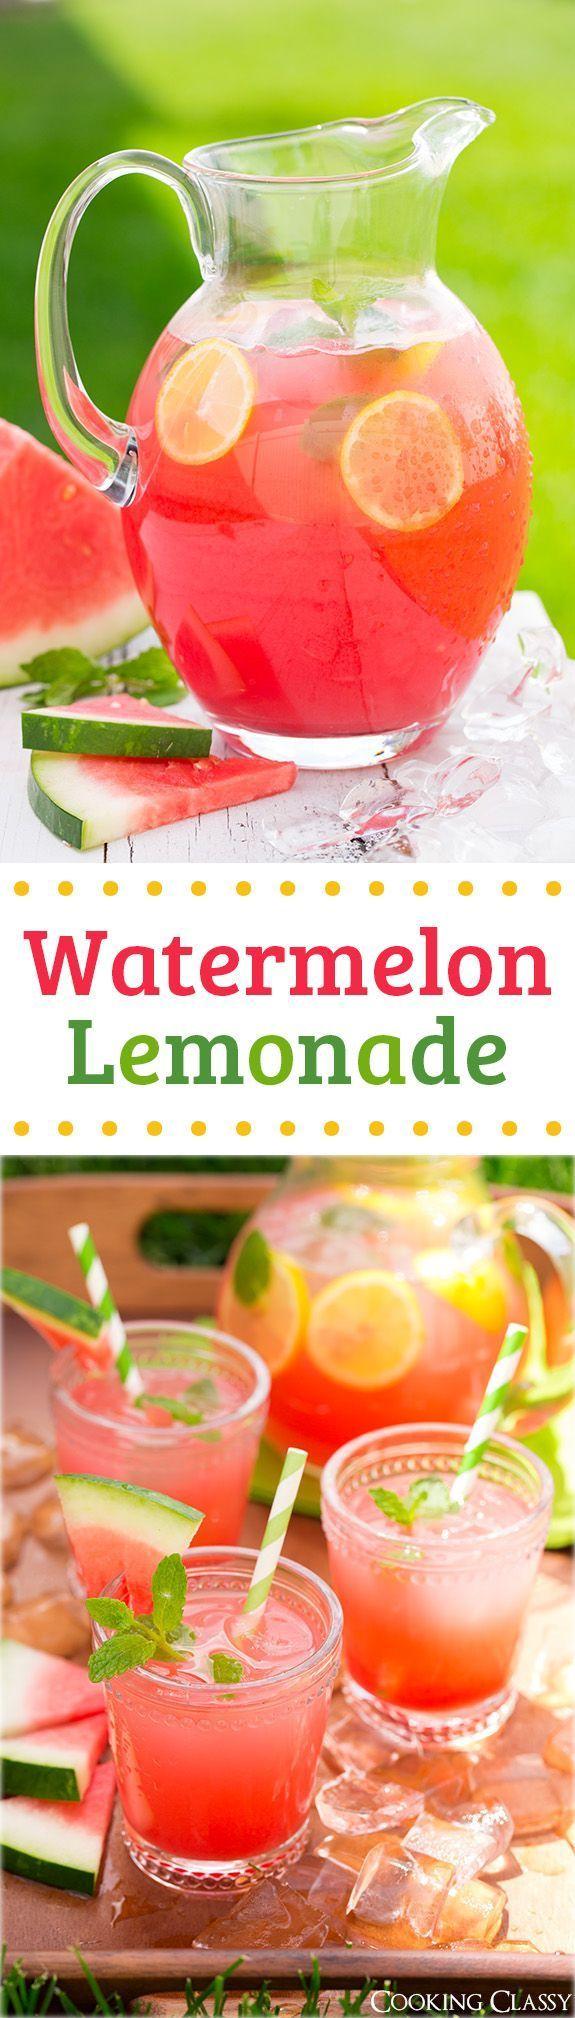 Wedding - Watermelon Lemonade